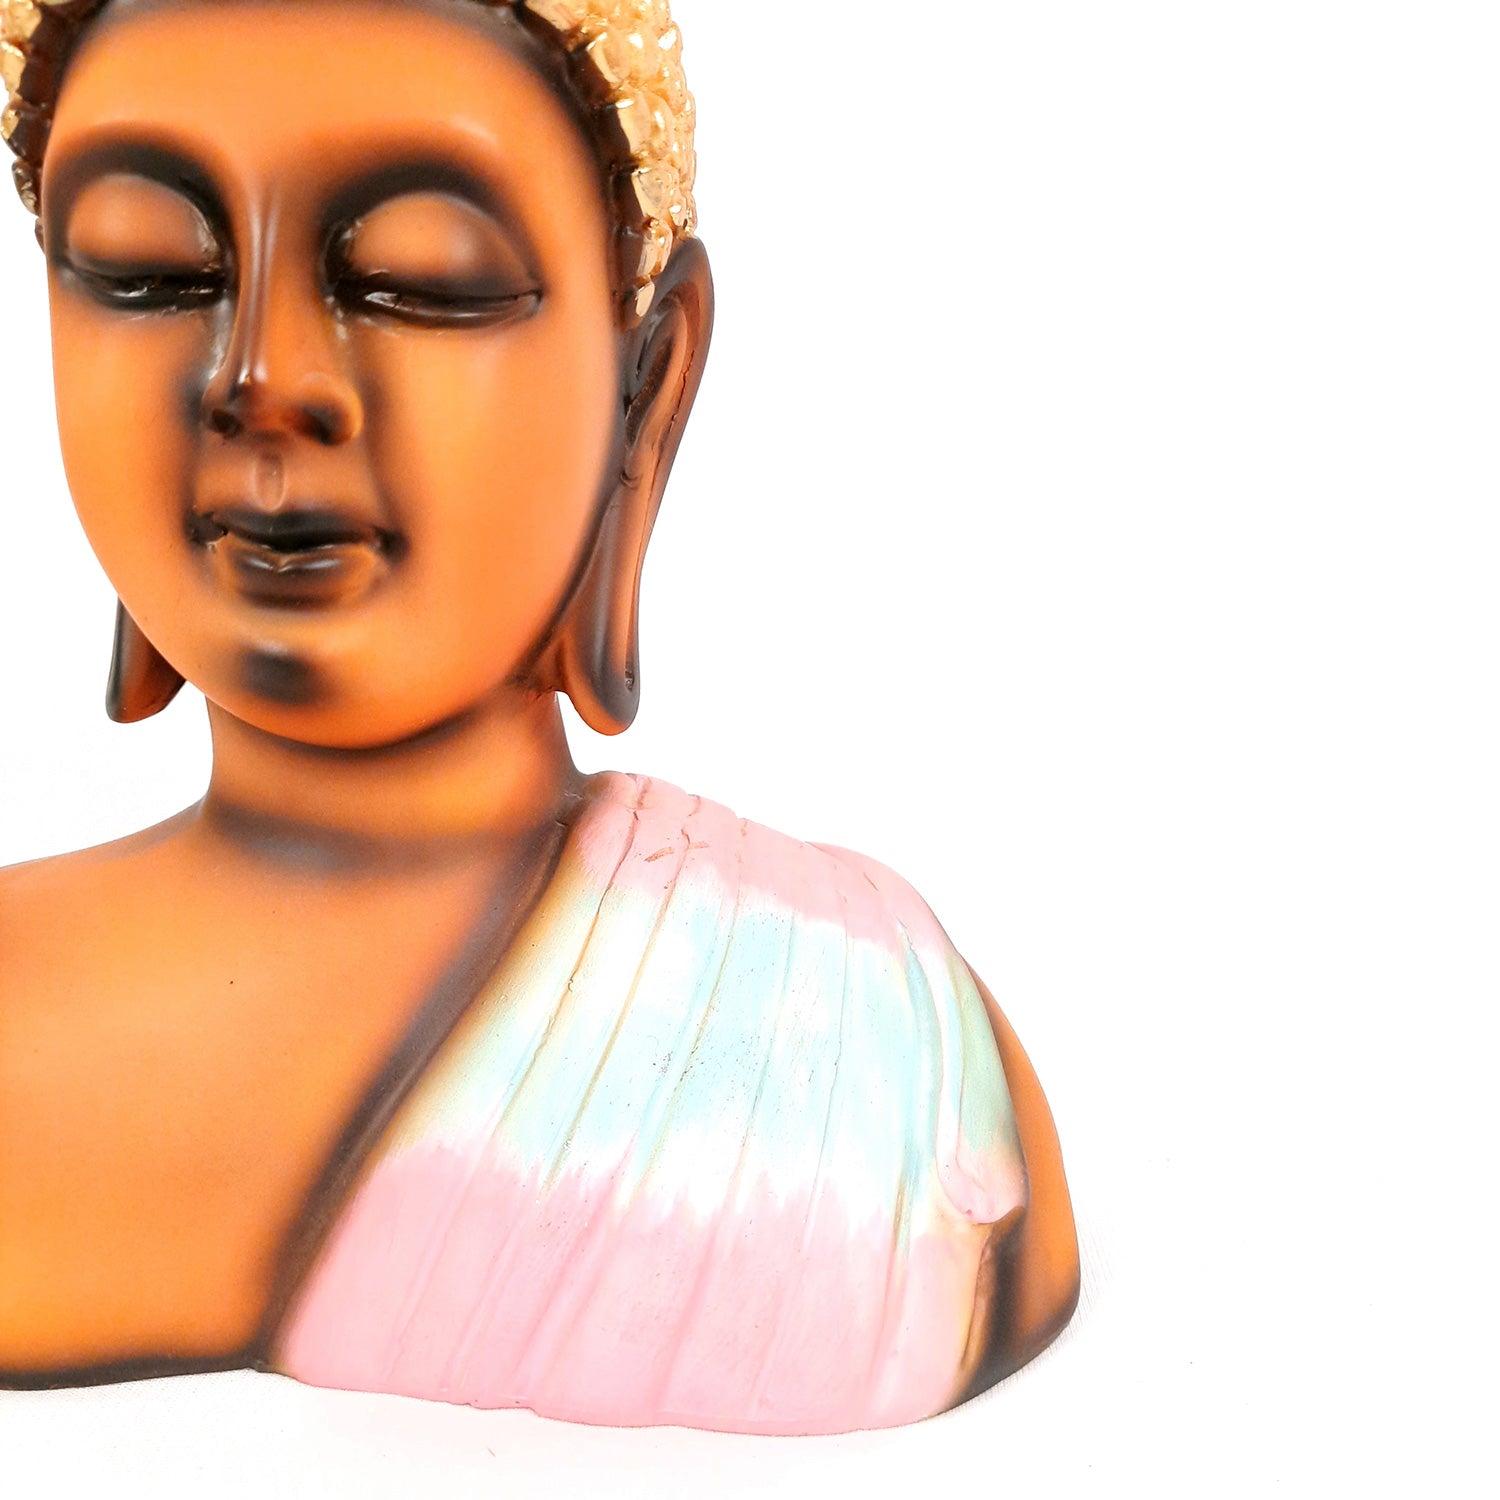 Buddha Statue | Lord Gautam Buddha Showpiece - For Living room, Home, Table, Office Decor & Gift - 9 Inch - Apkamart